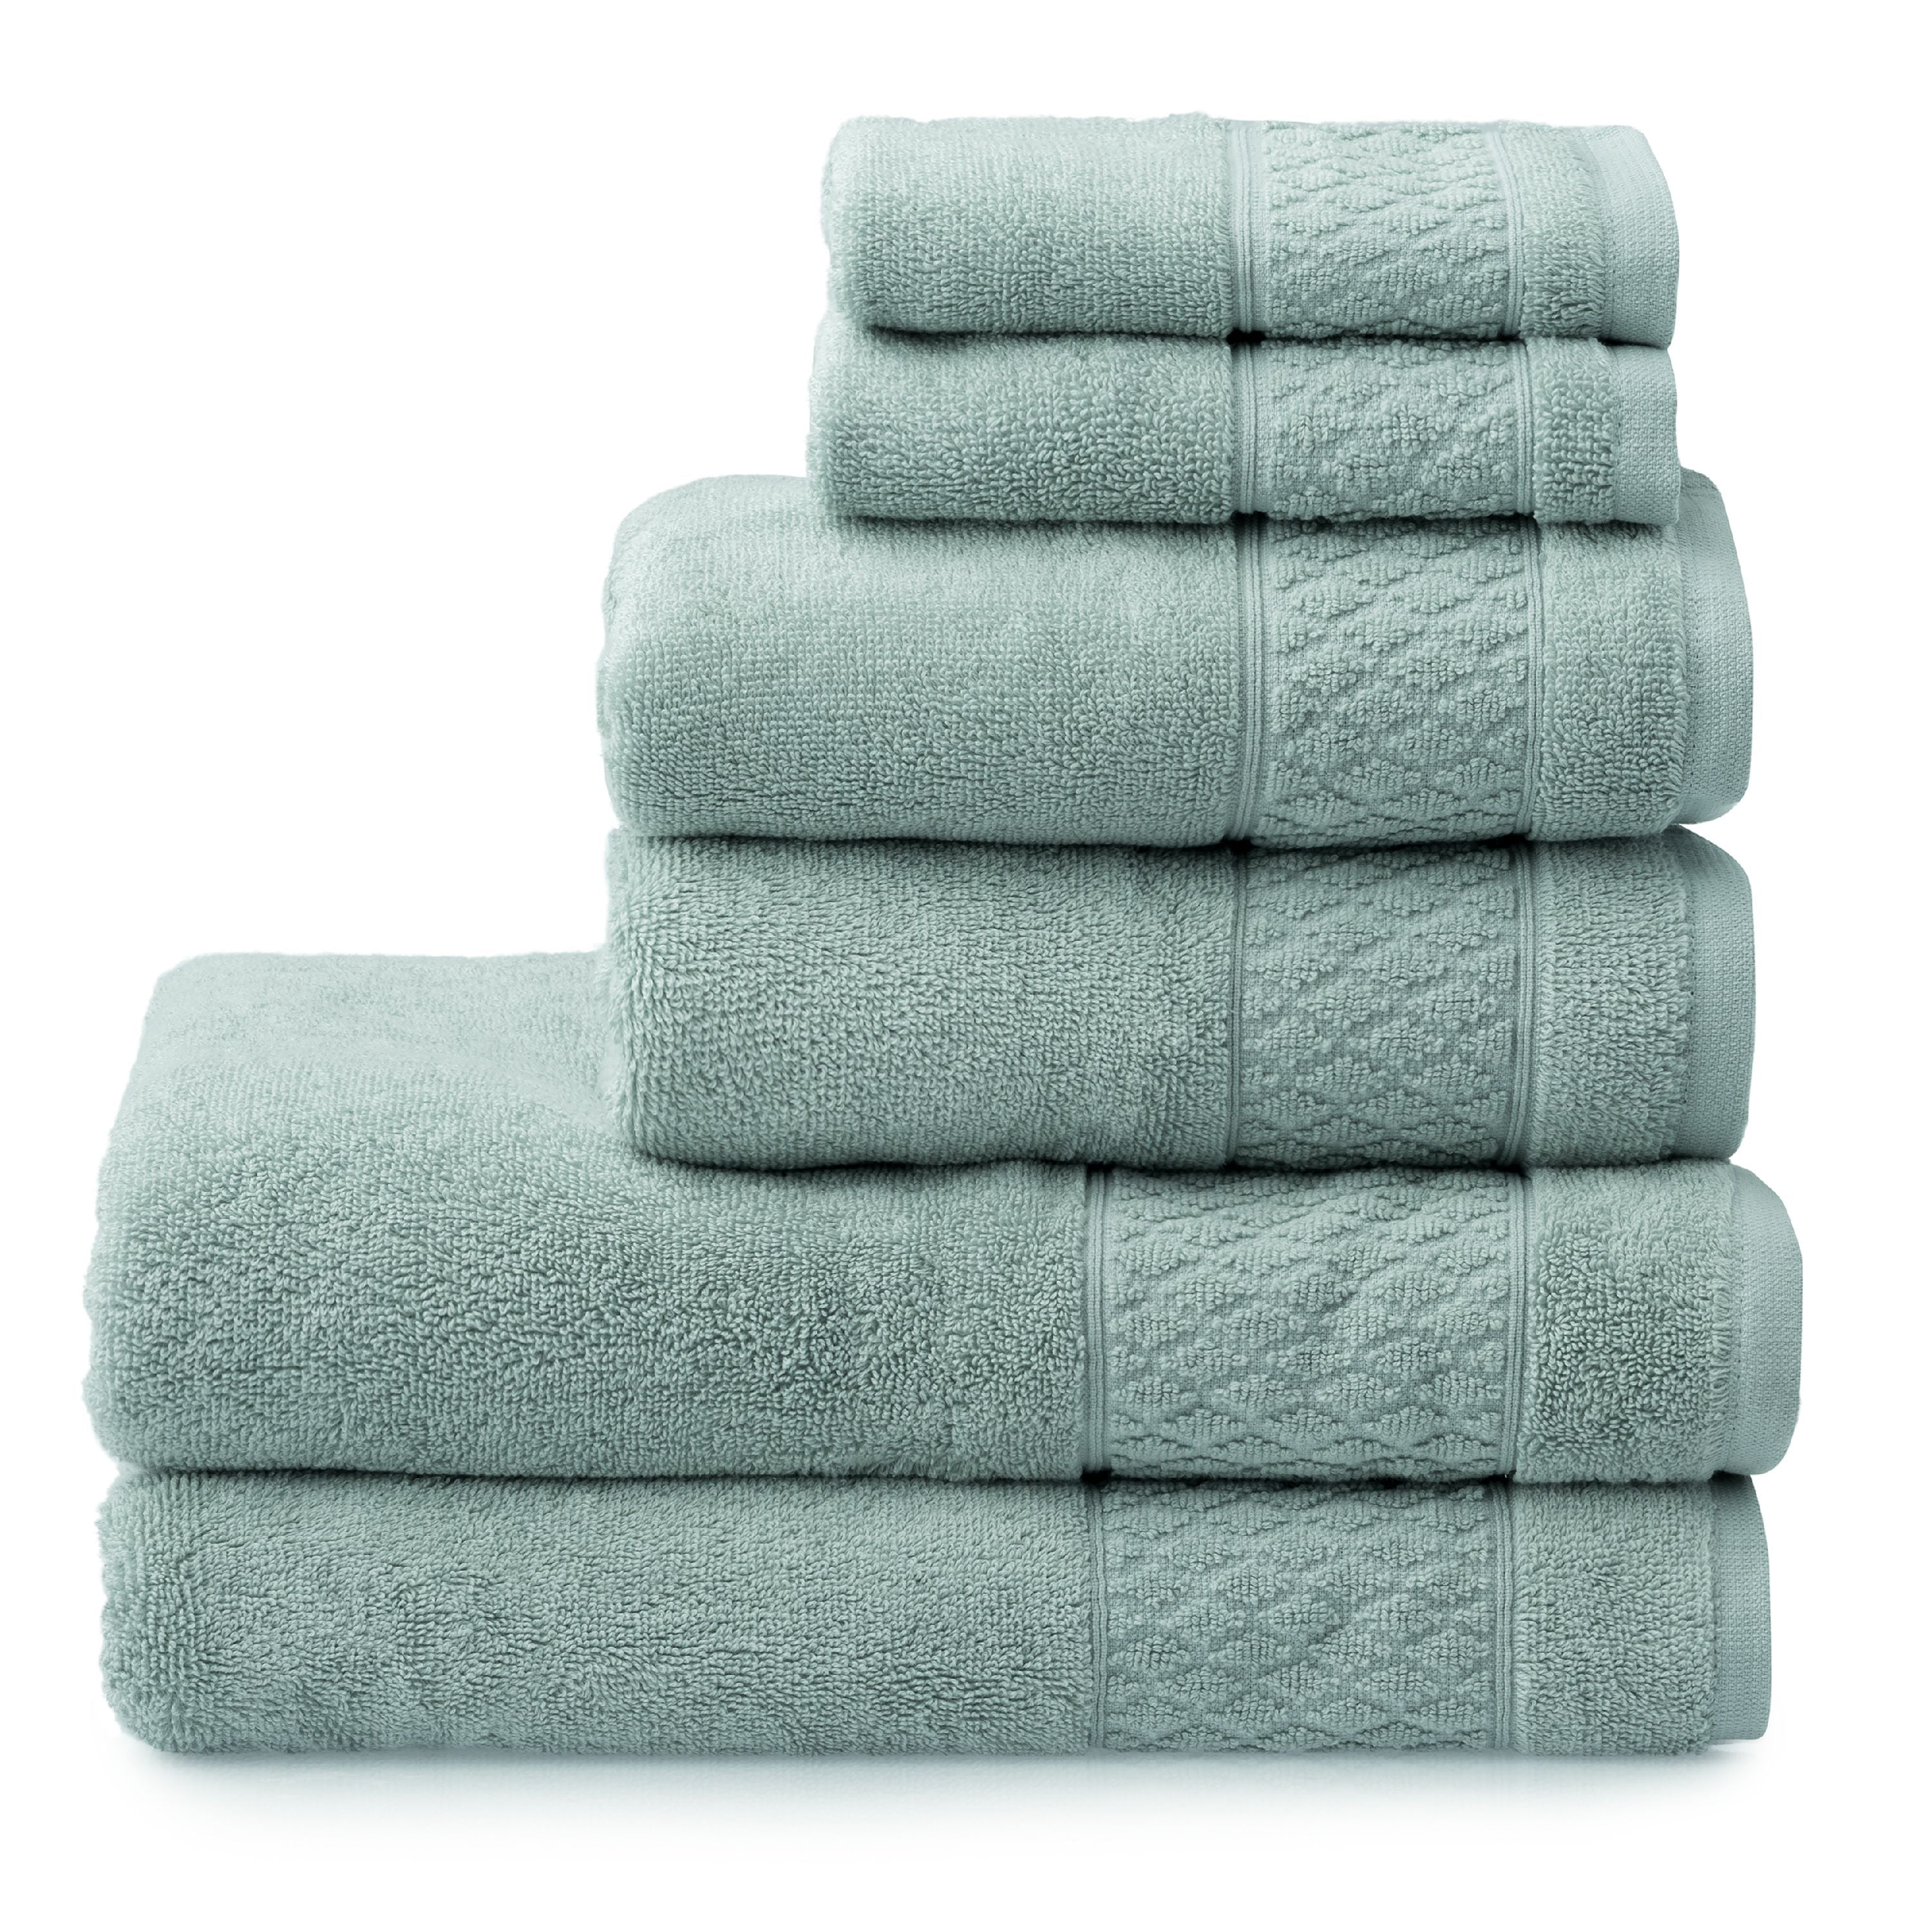 600 GSM 100% Cotton Bath Linen Set Welhome Franklin Premium Soft & Absorbent Popcorn Textured Charcoal Gray Bathroom Towels 4 Piece Bath Towel Sets Hotel & Spa Towels for Bathroom